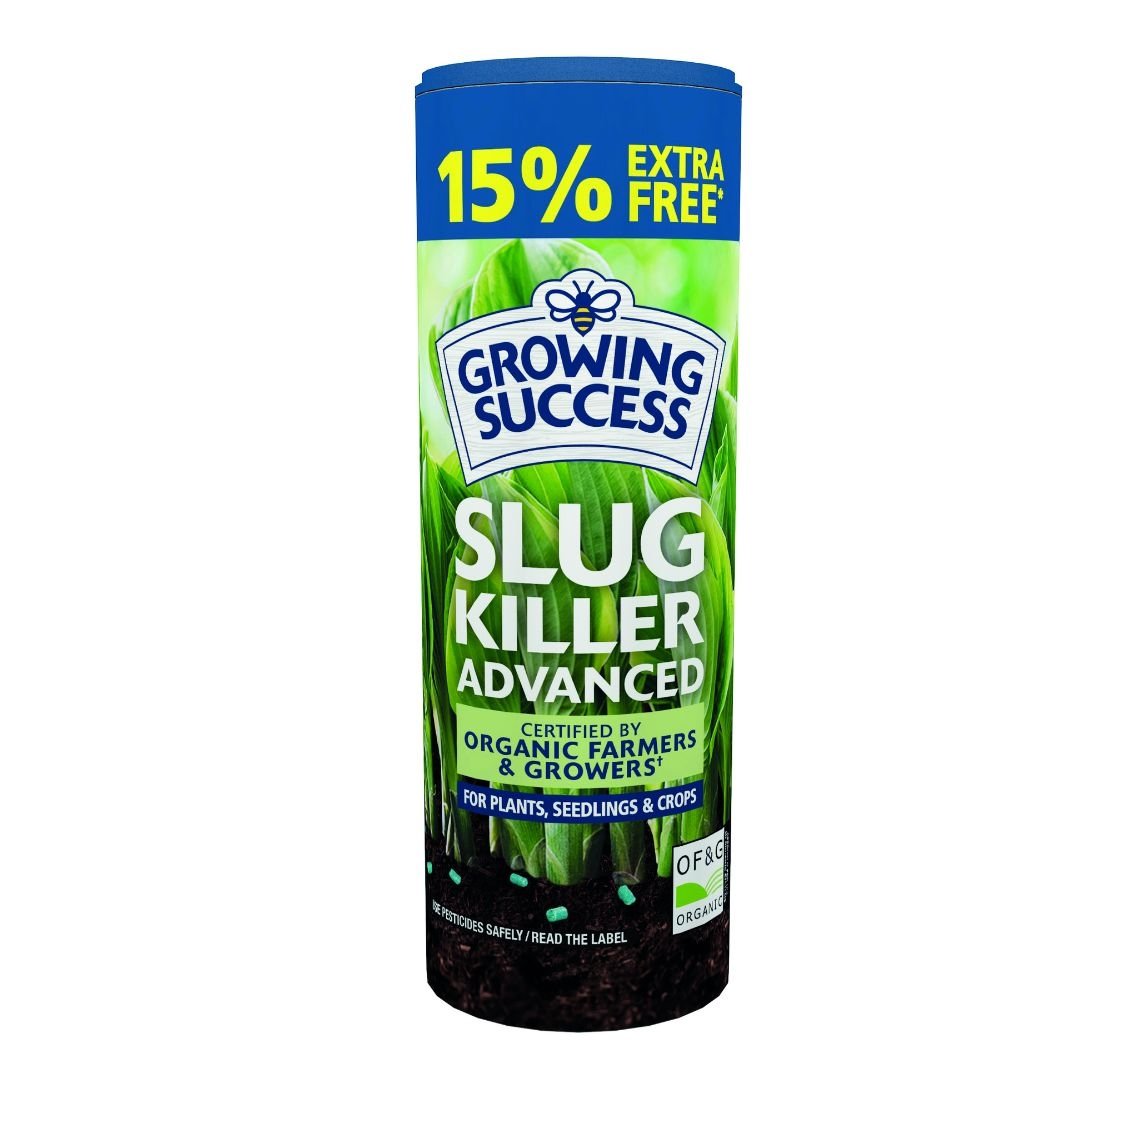 Growing Success Slug Killer Advanced Organic + 15% Extra Free